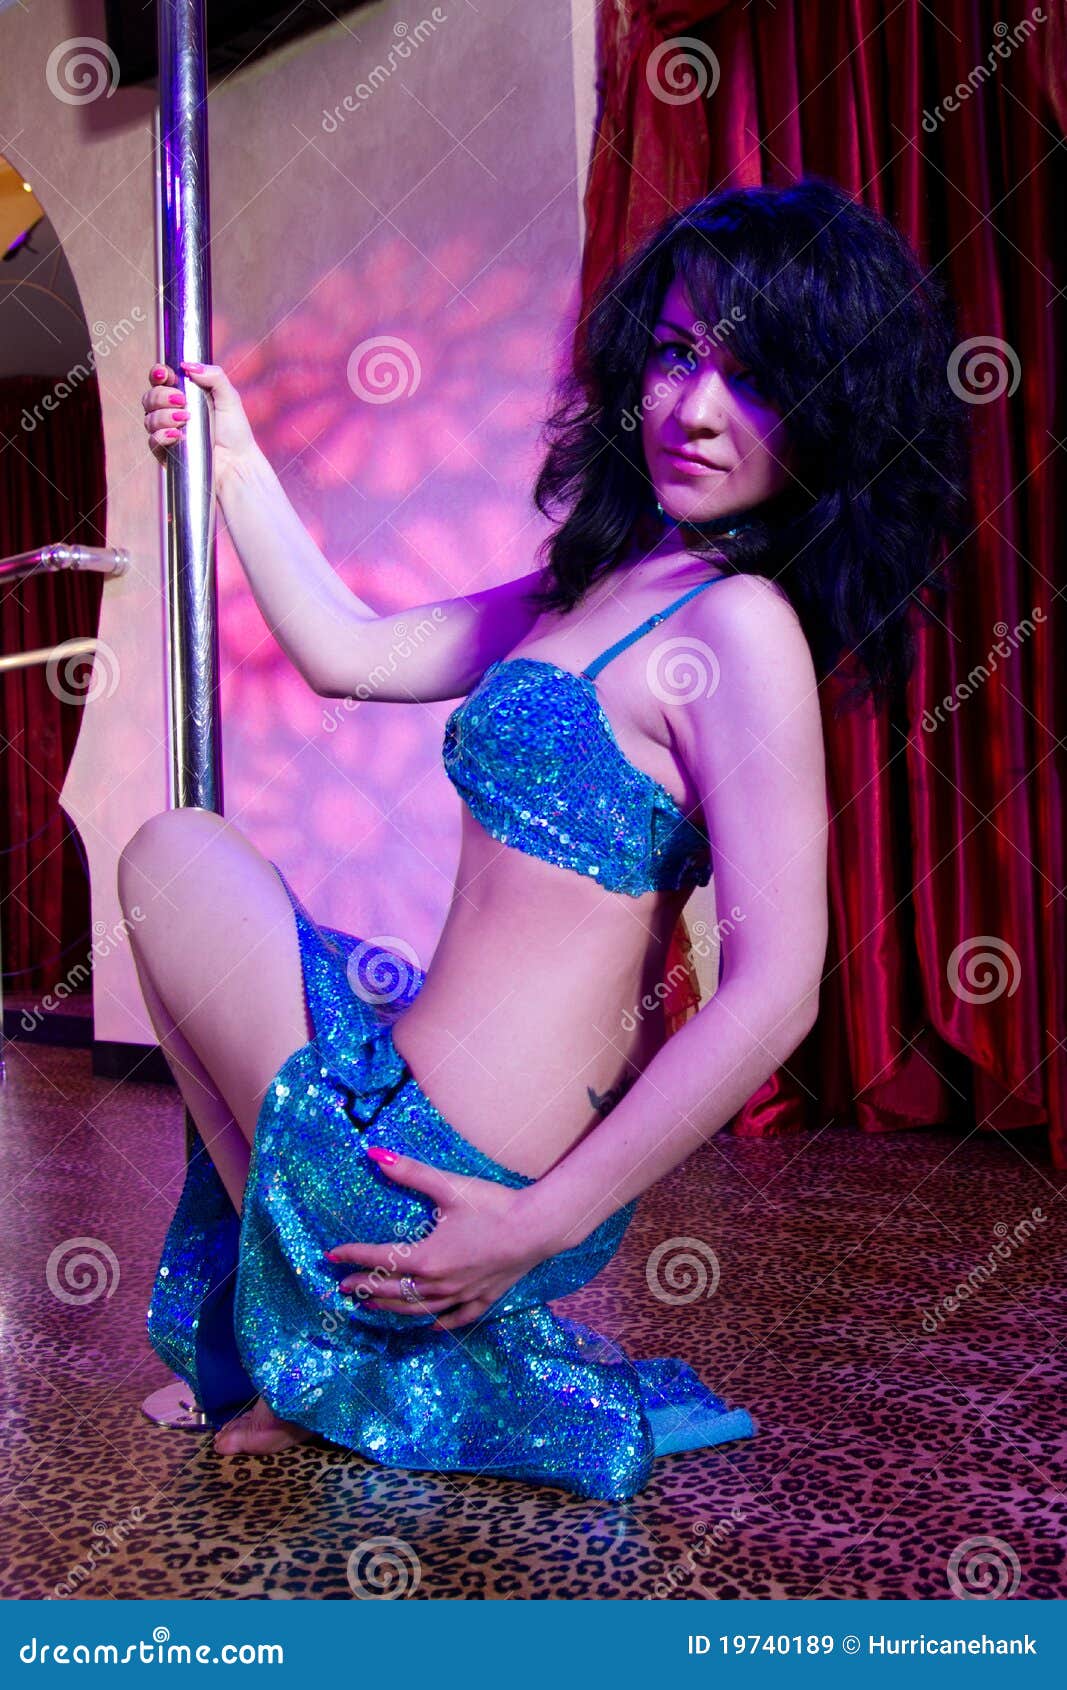 costume Stripper pole